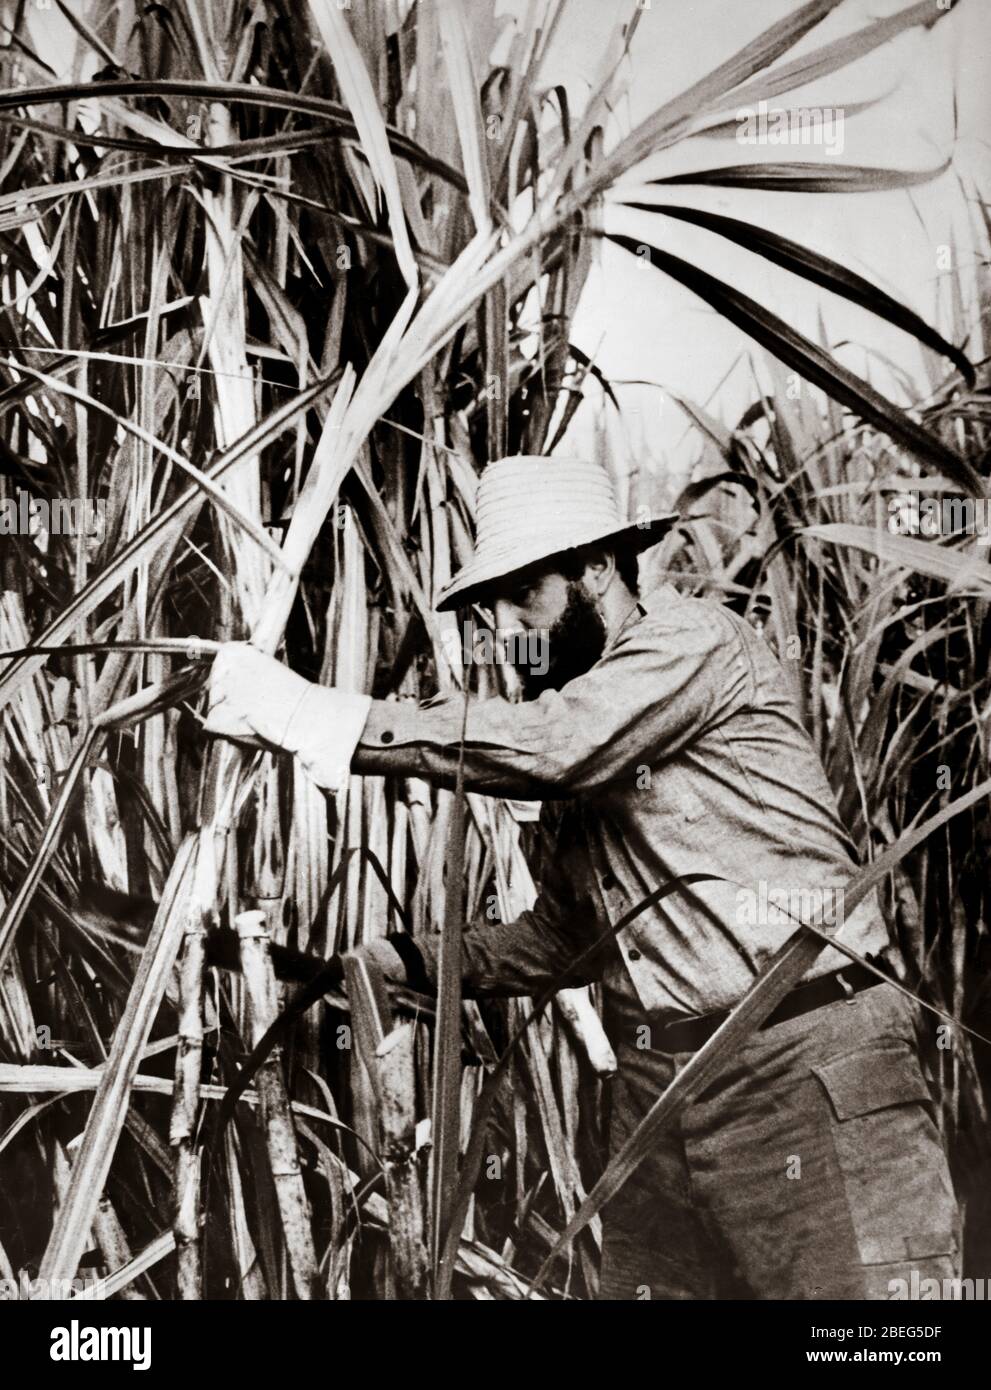 Cuban leader FIDEL CASTRO chops sugar cane in Cuba. Stock Photo